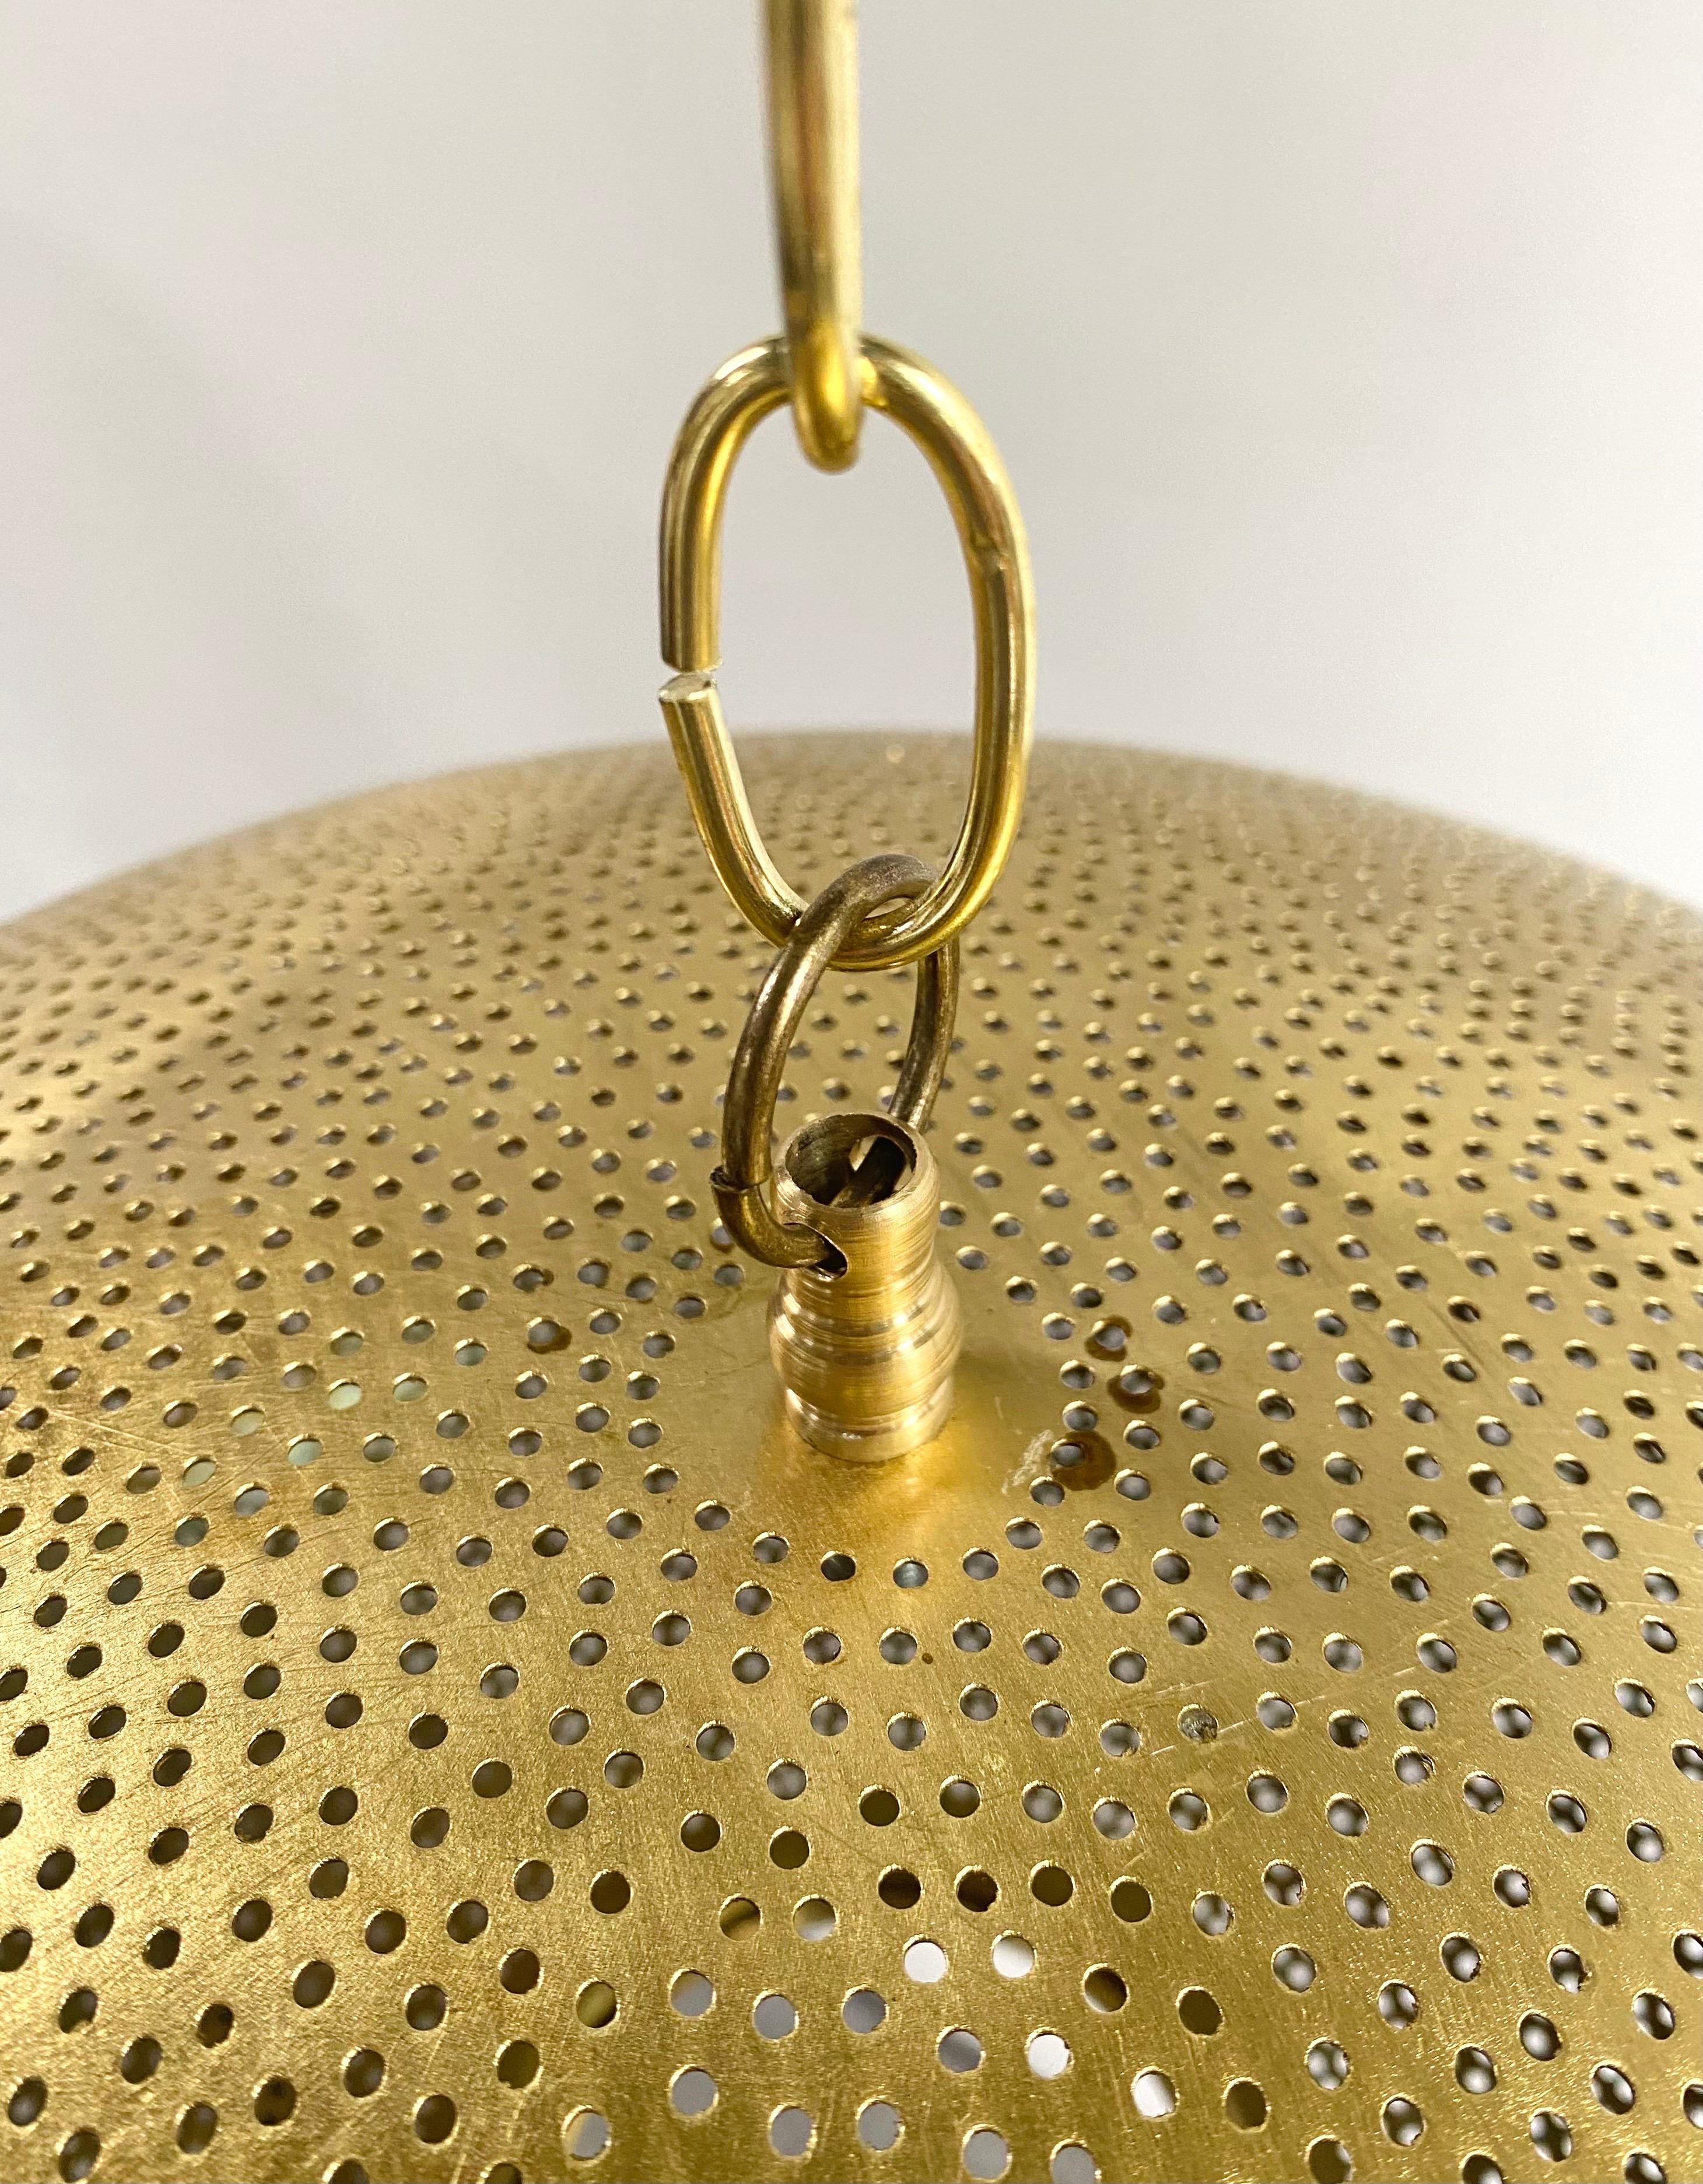 Modern Boho Chic Style Oval Brass Pendant or Lantern For Sale 1